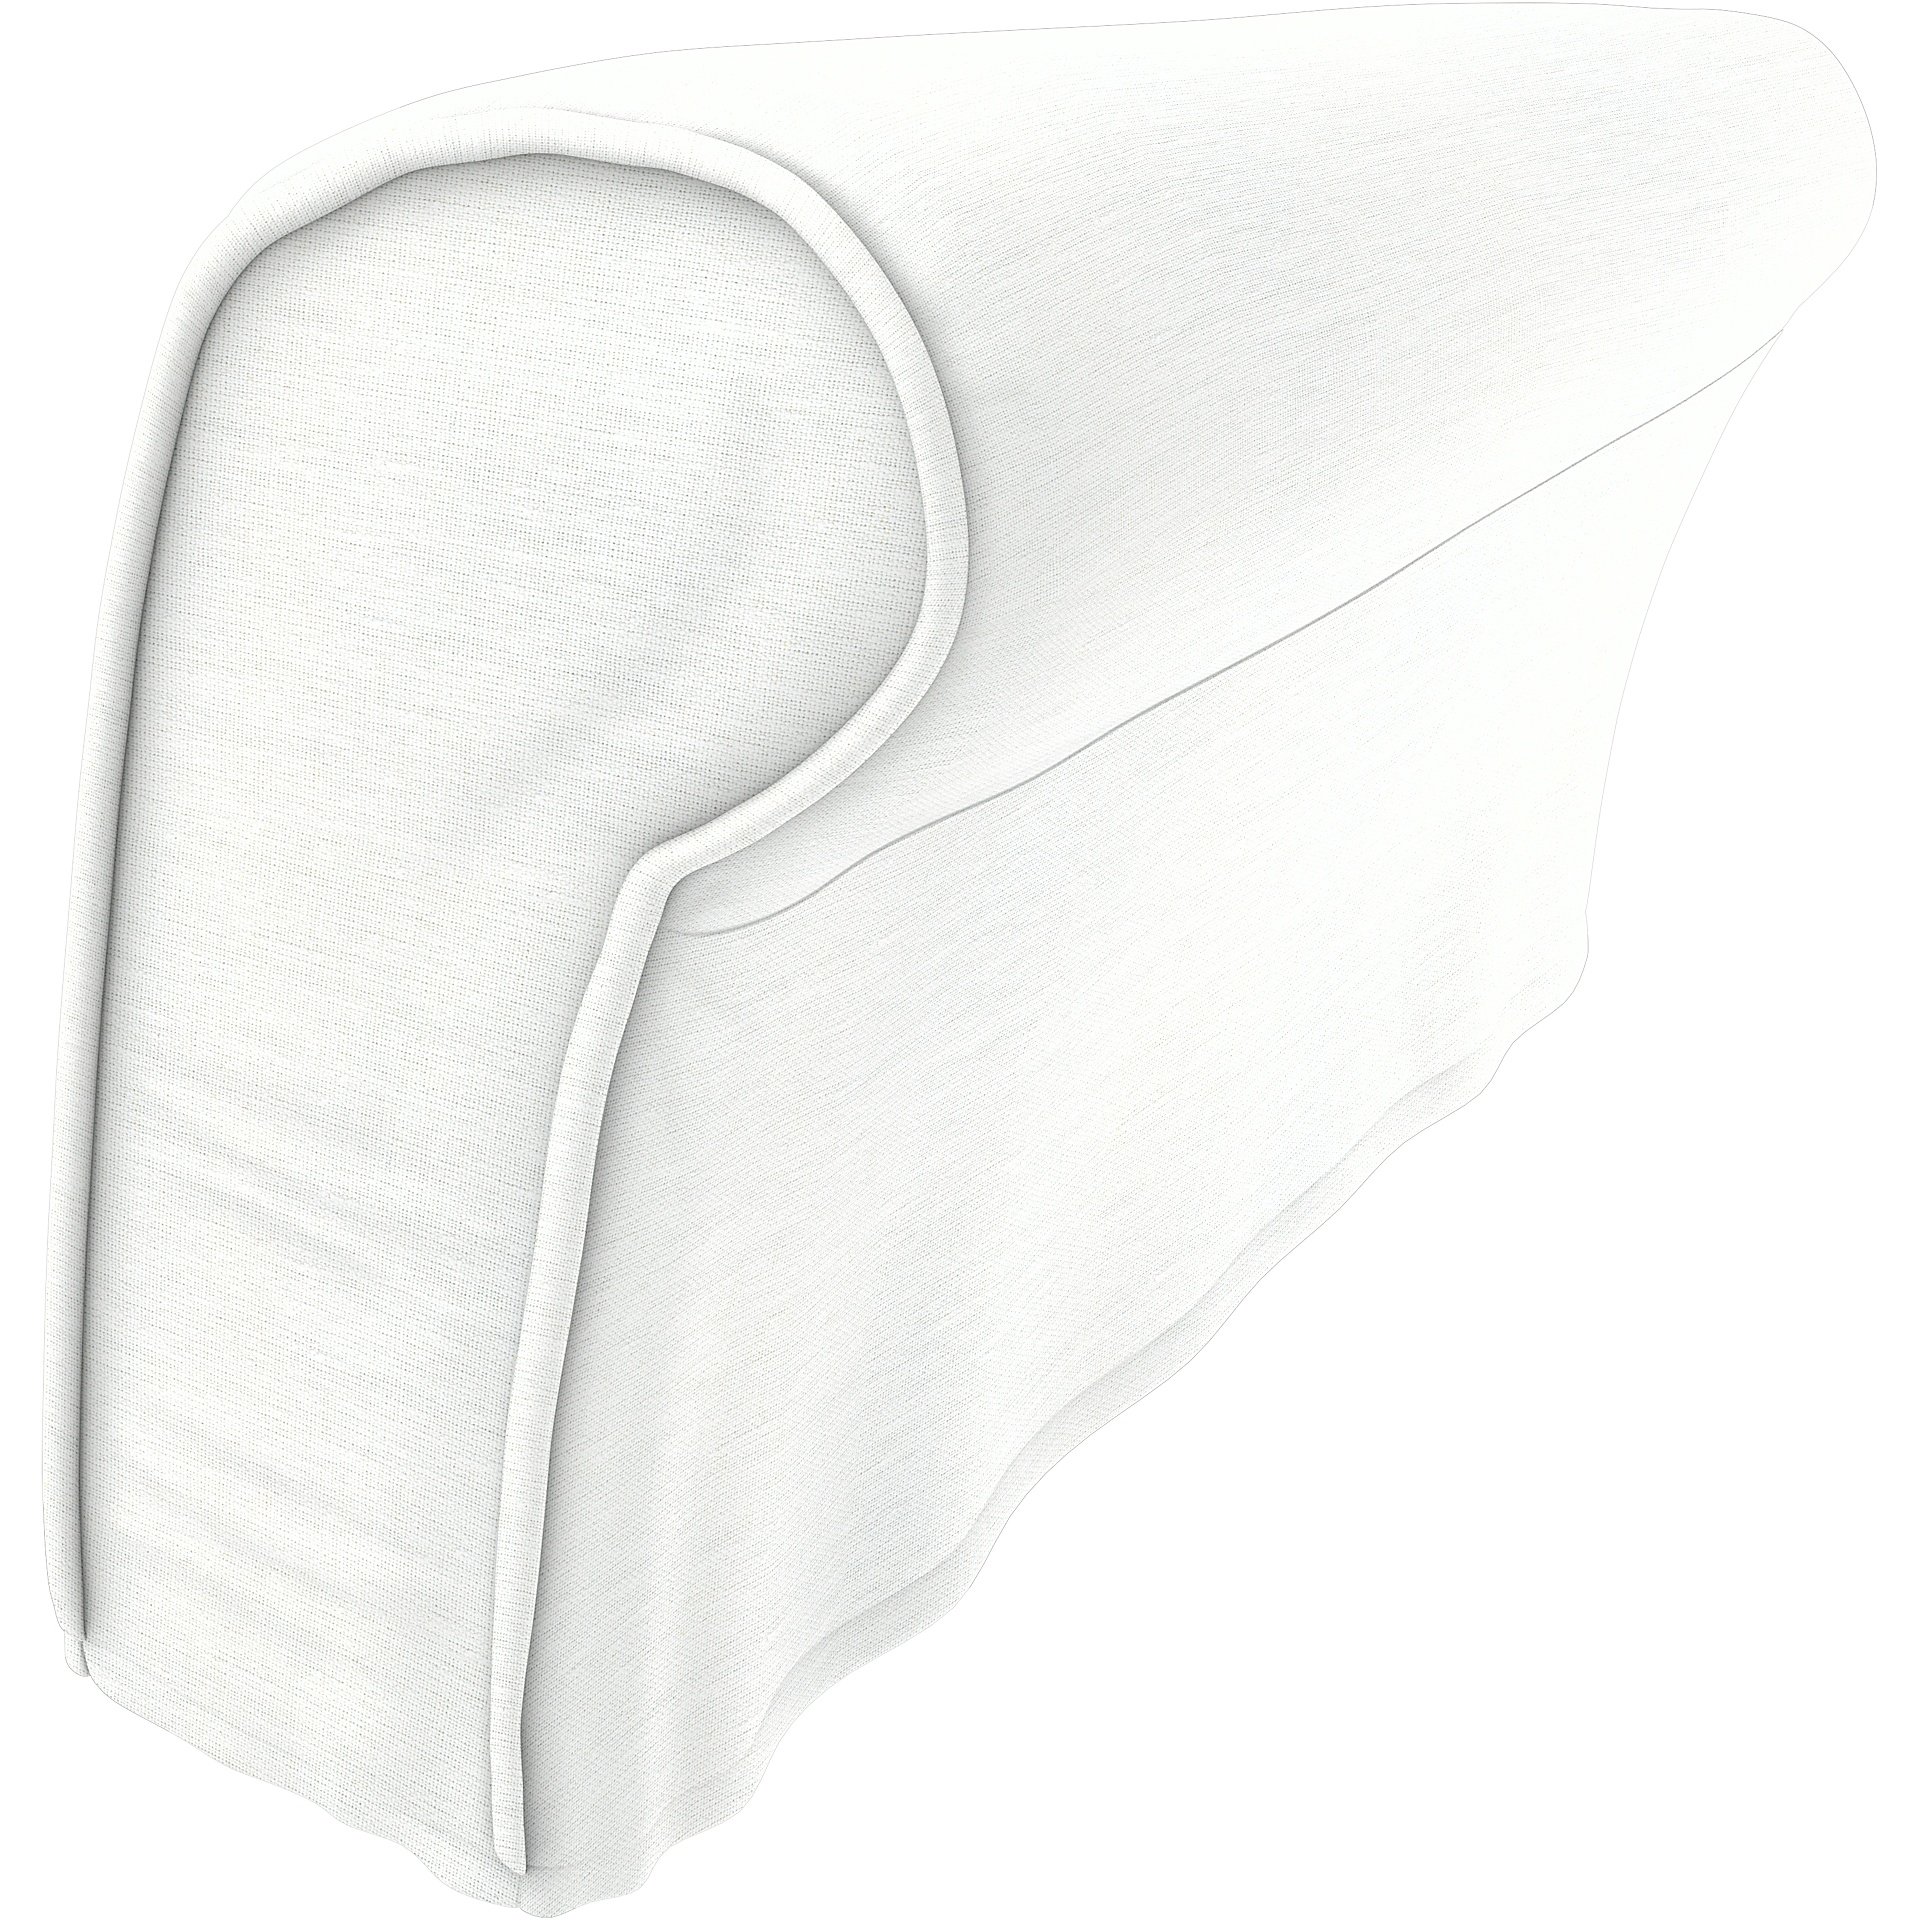 IKEA - Strandmon Armrest Protectors (One pair), White, Linen - Bemz